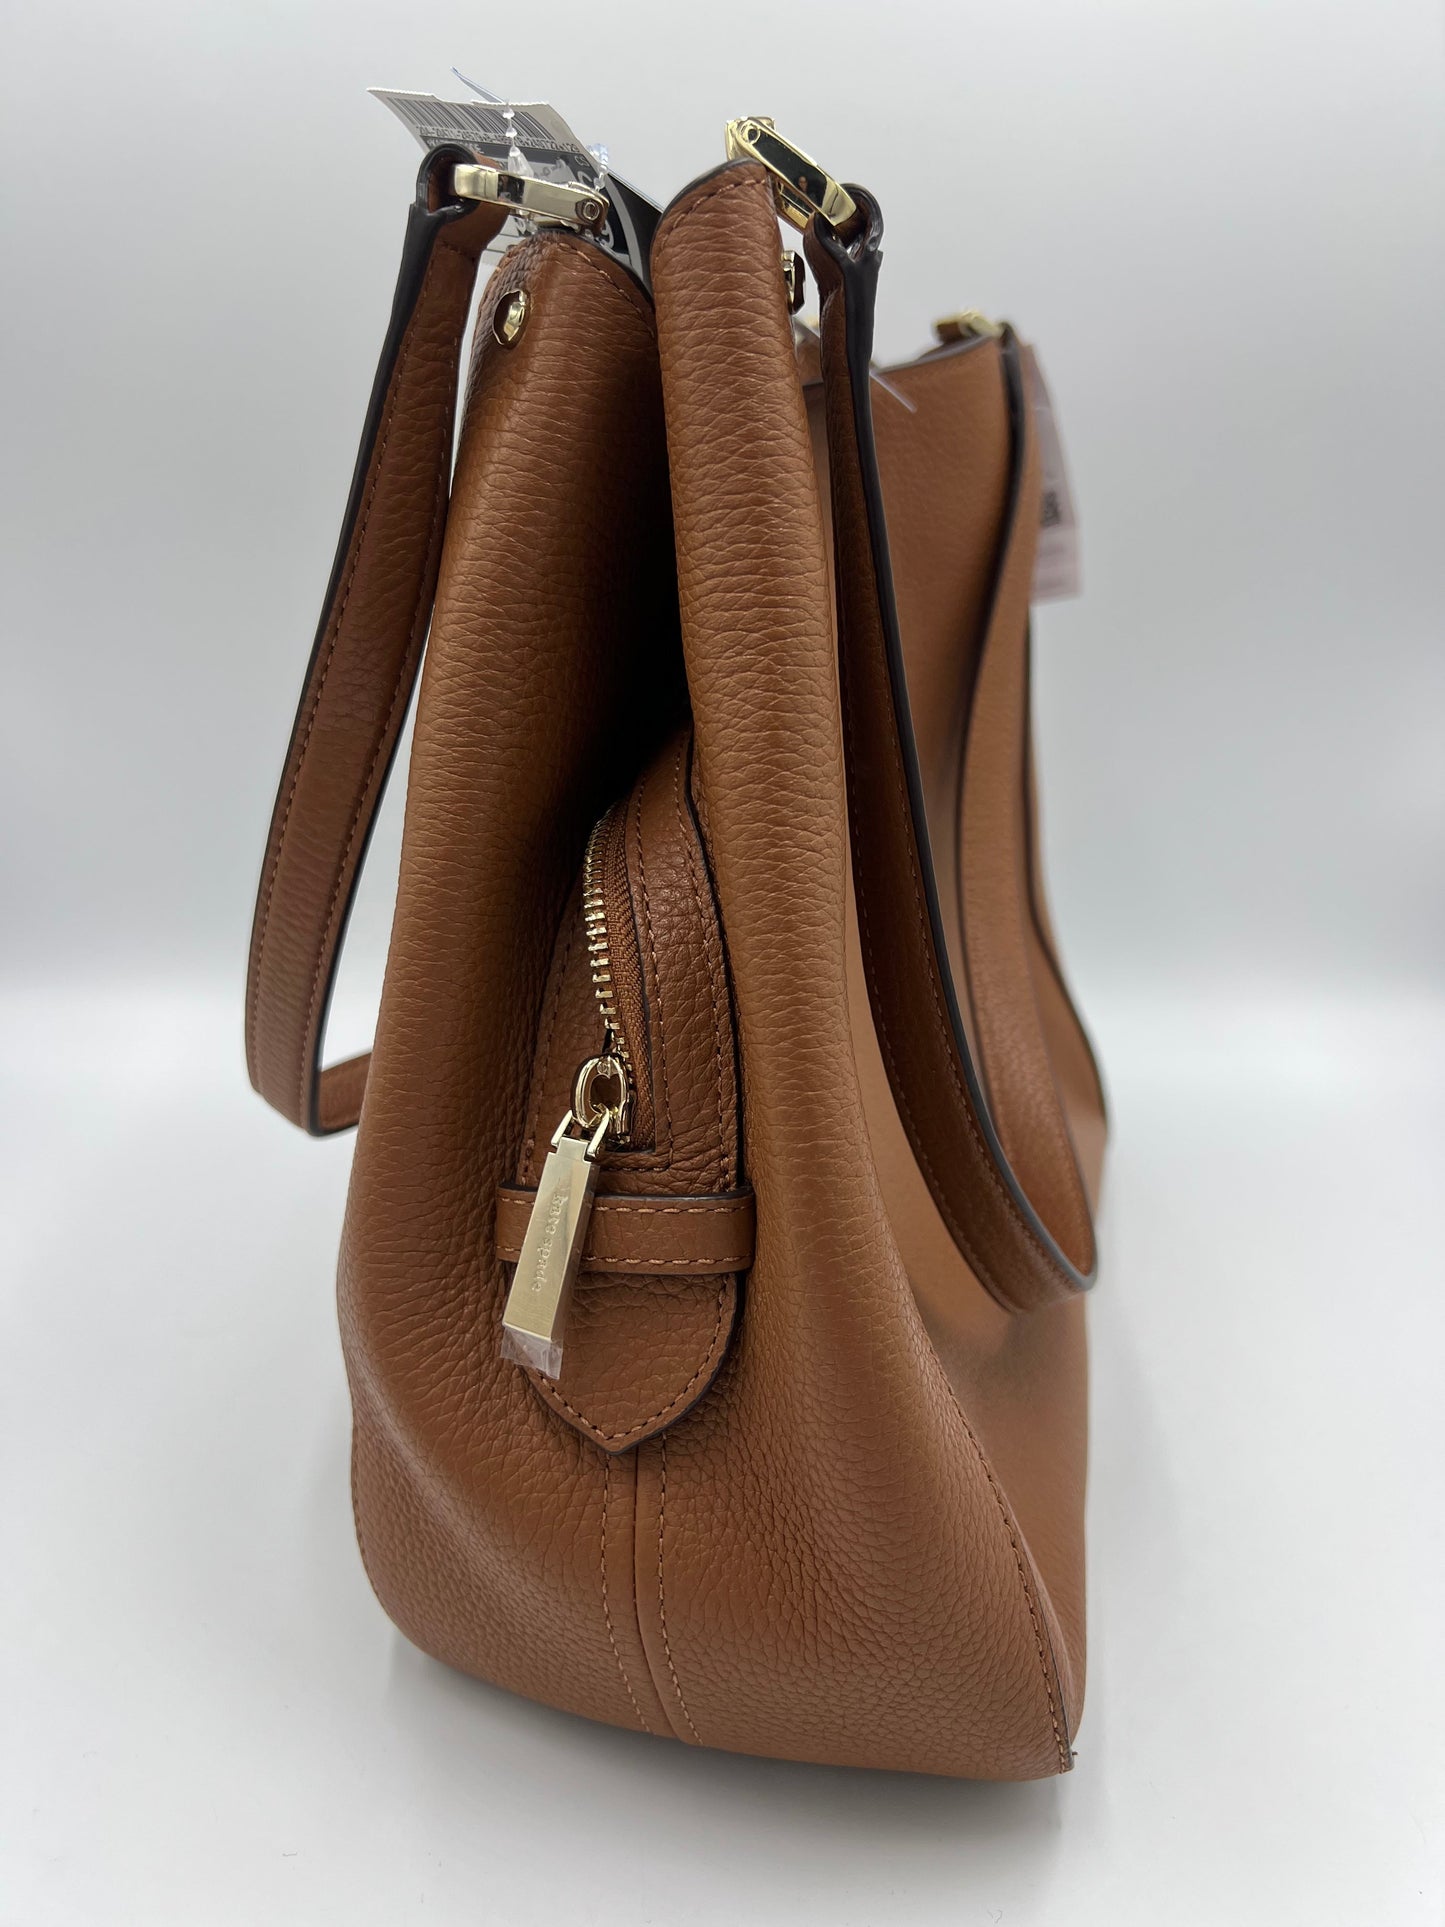 New! Kate Spade Handbag Designer